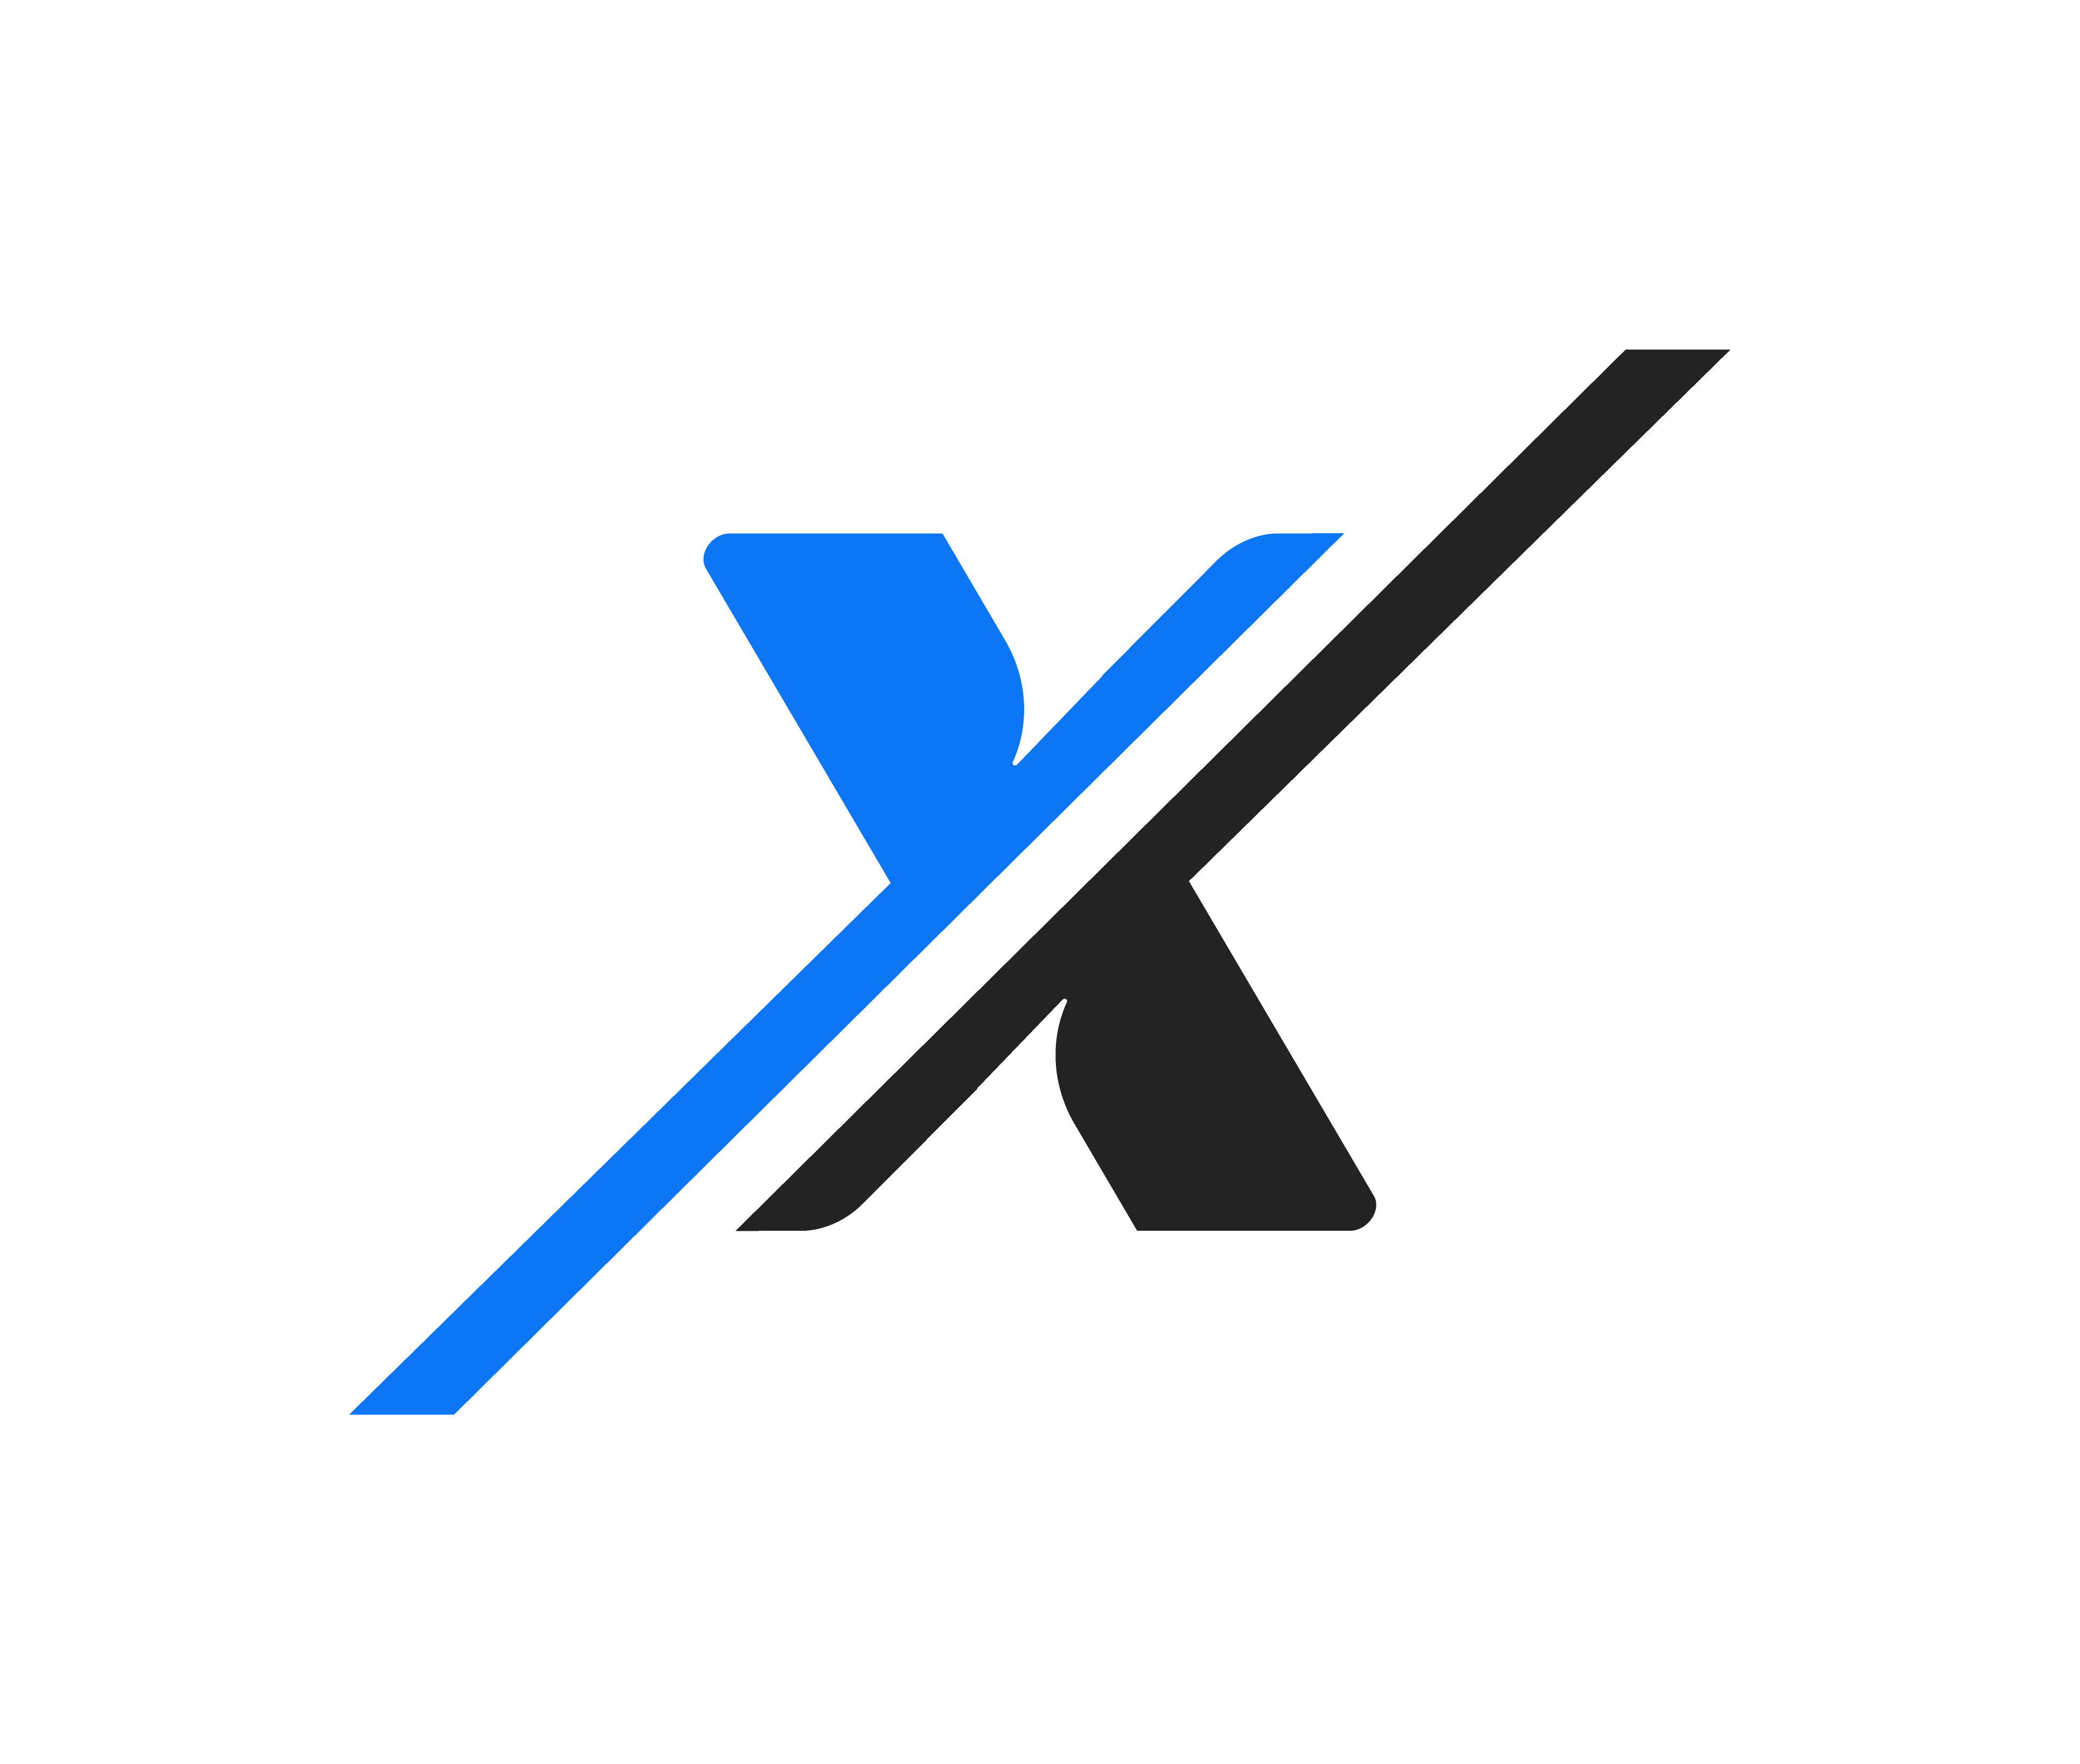 Logo Xtreme